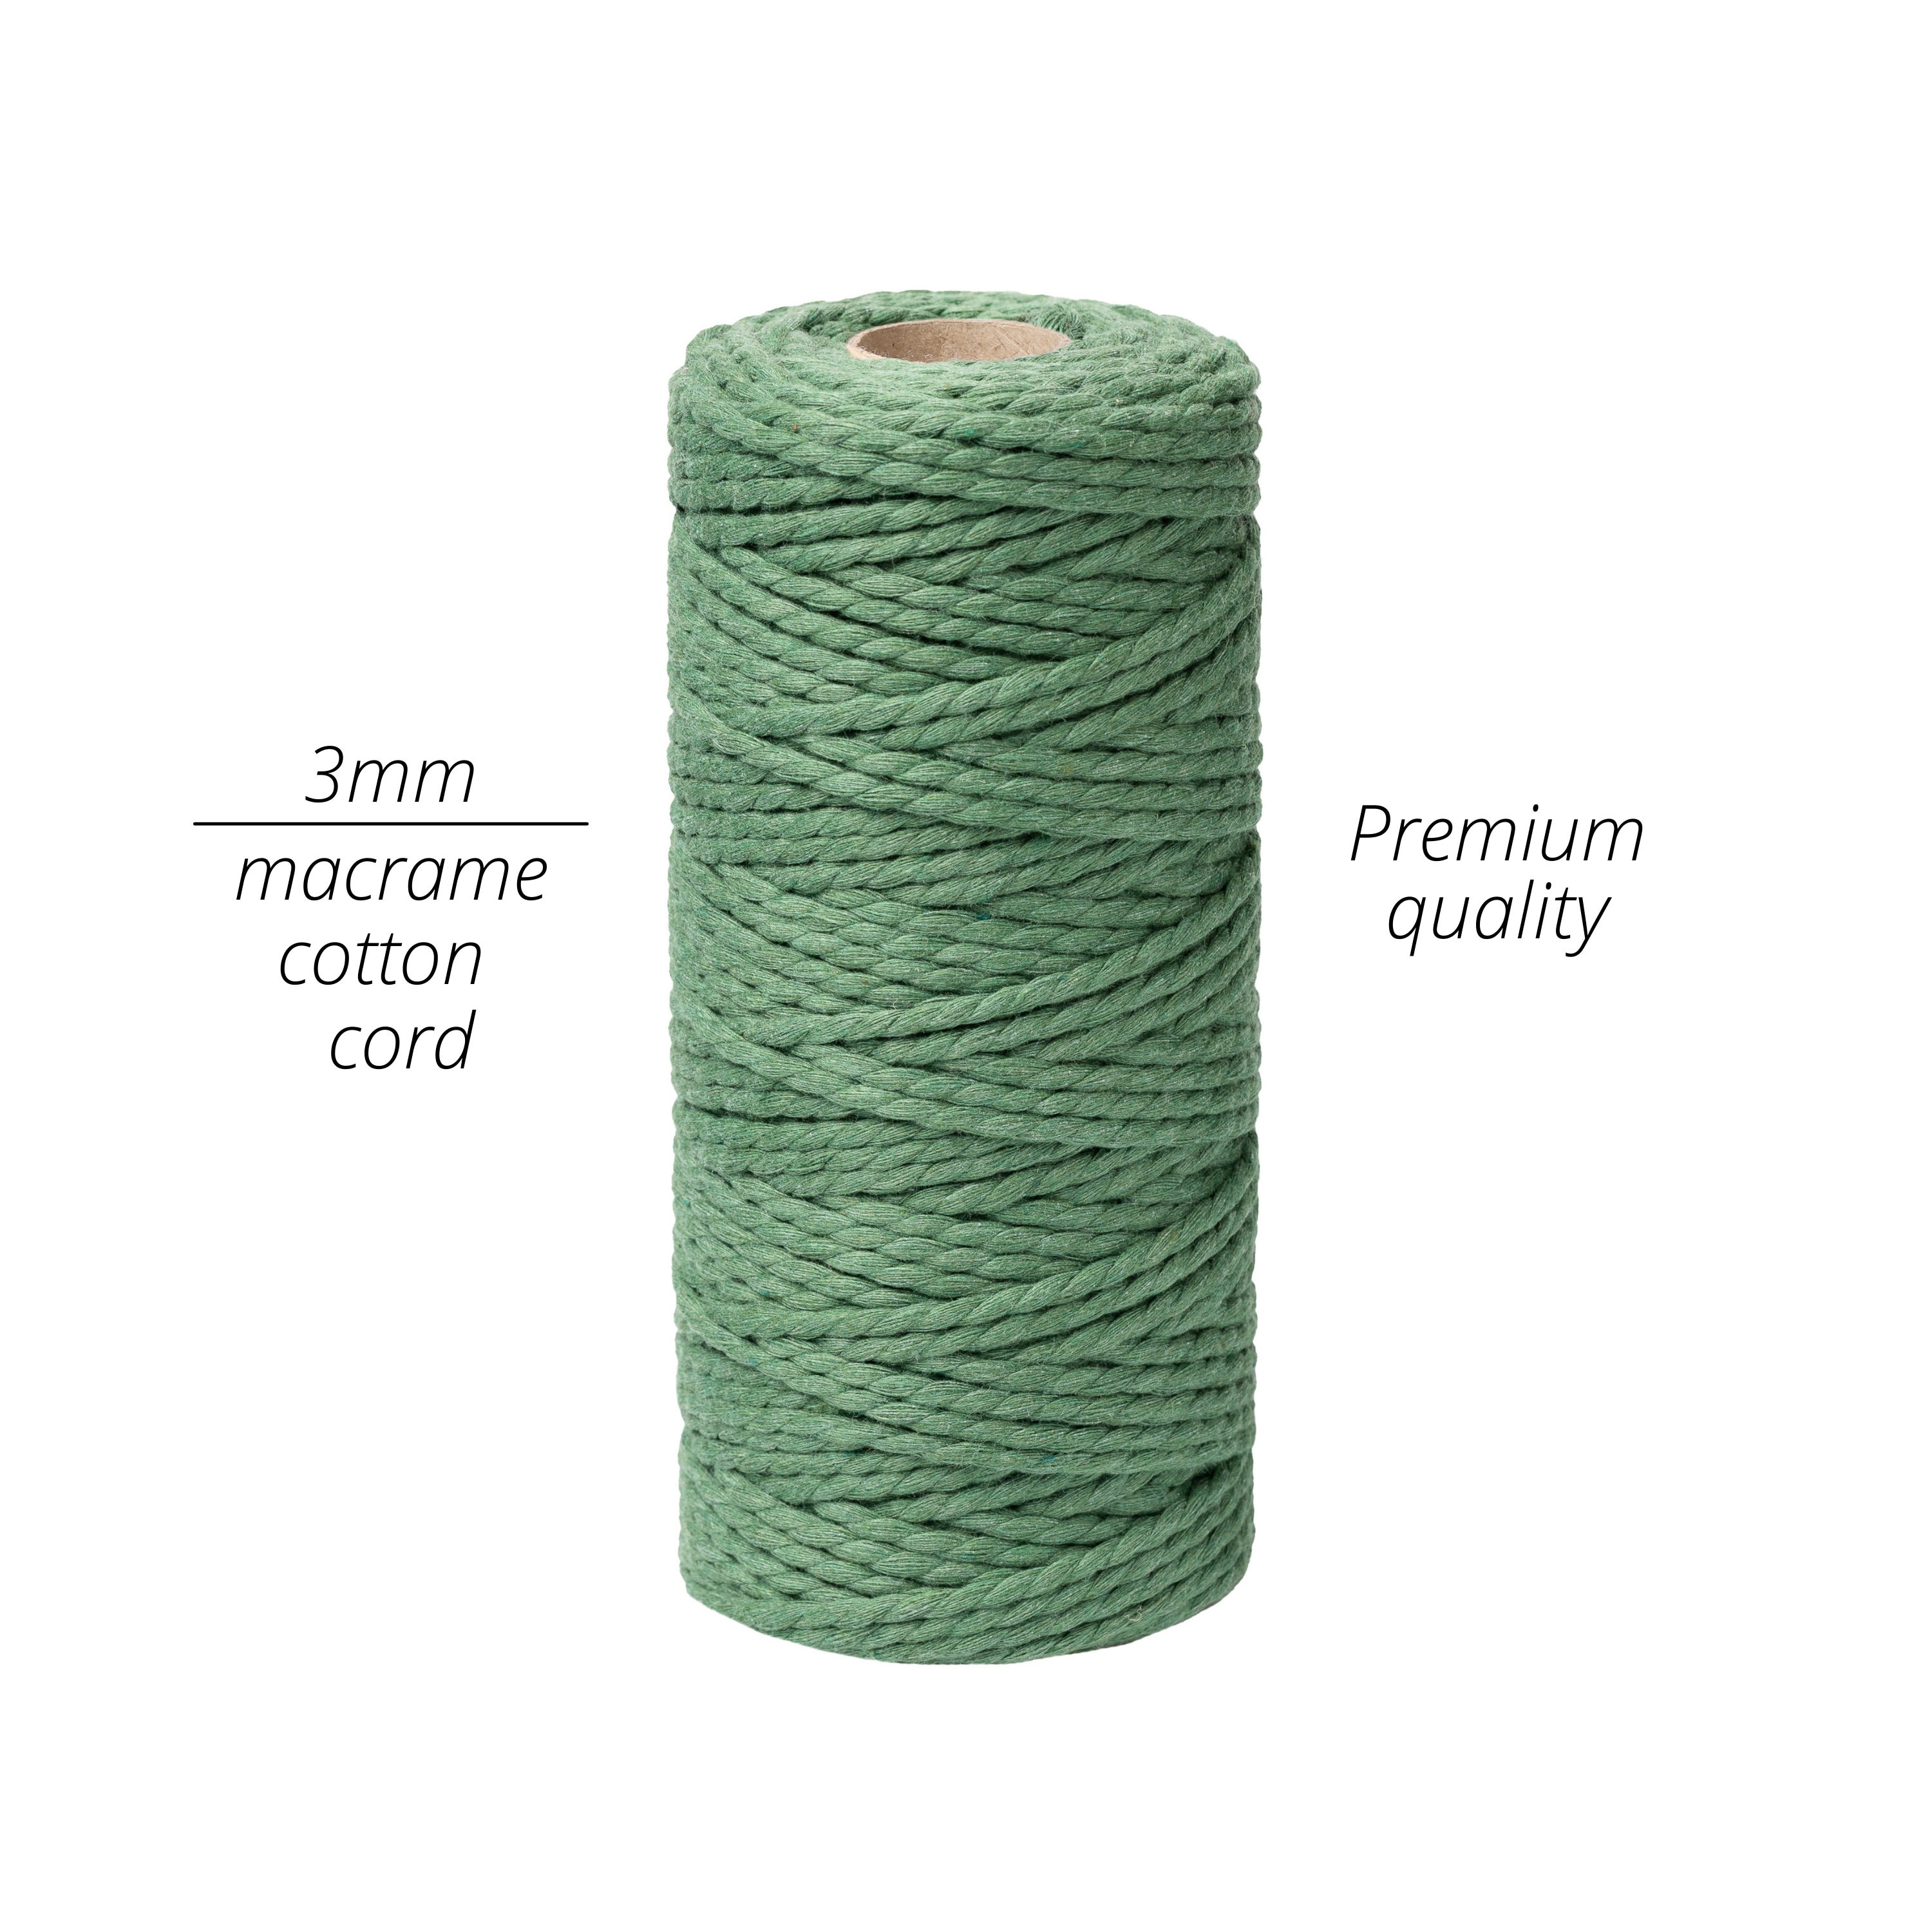 864 Yard (800 m) 5 mm Cotton cord, twisted Macrame cord,Twisted 100% cotton macrame  rope , macrame tarn, decor craft DIY cord